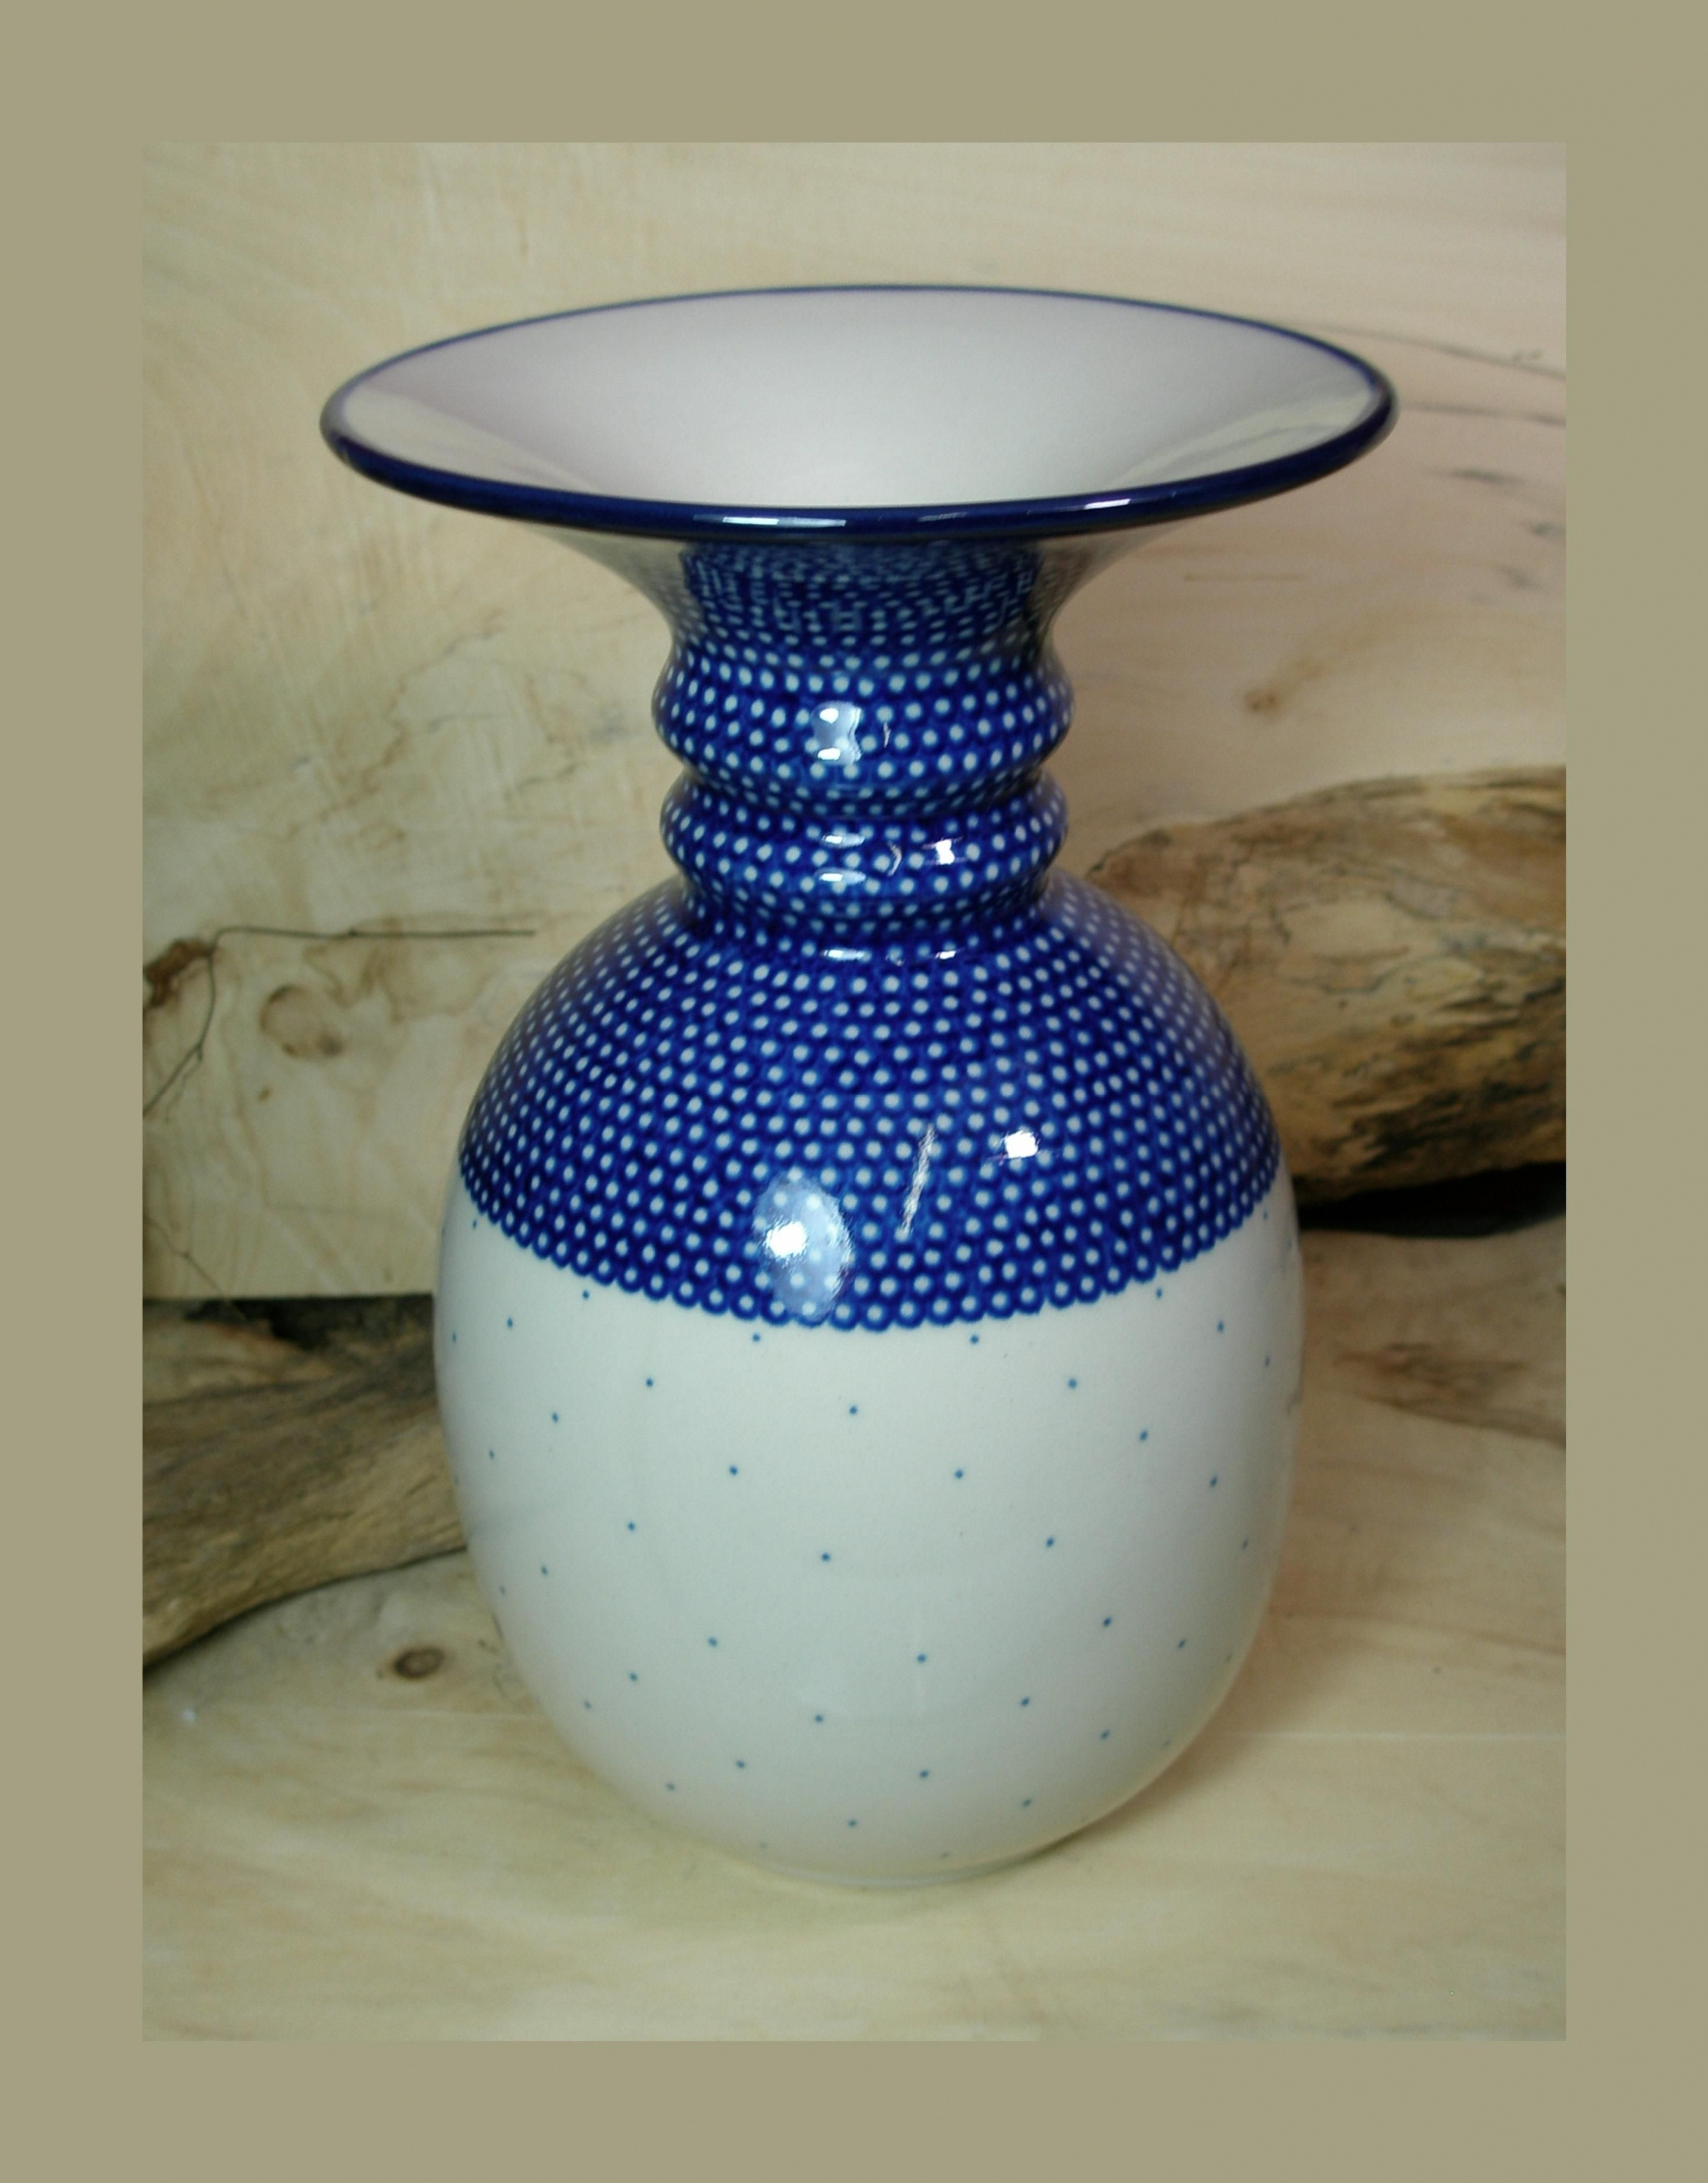 24 Fantastic Le Vase Bleu 2024 free download le vase bleu of royal copenhagen crackle ware what the blue lamp was made from you intended for image de 1929 rometti umbertide allegoria vase italian avant garde design